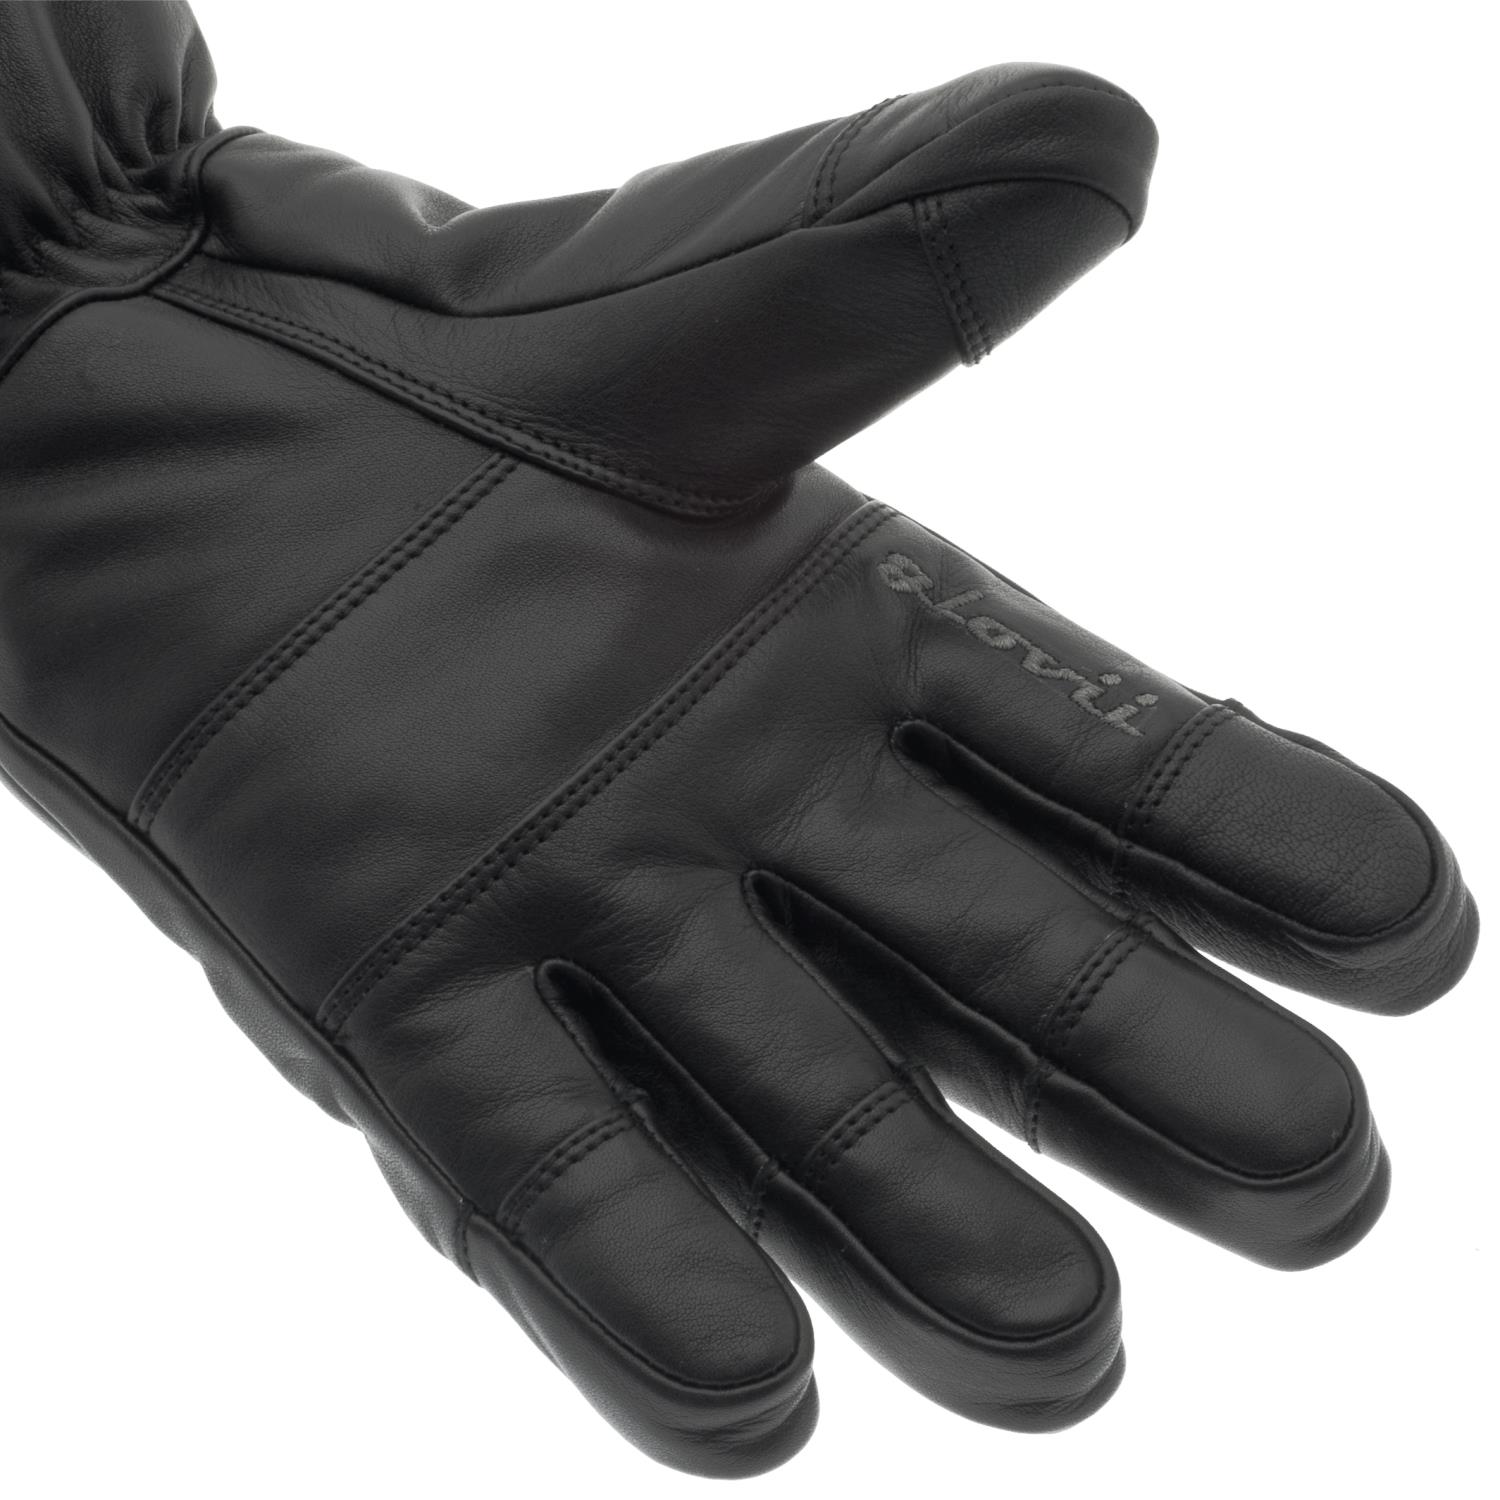 SUNEN Glovii - Universal Ski Battery Heated Leather Gloves, size XL, black kabatas lukturis